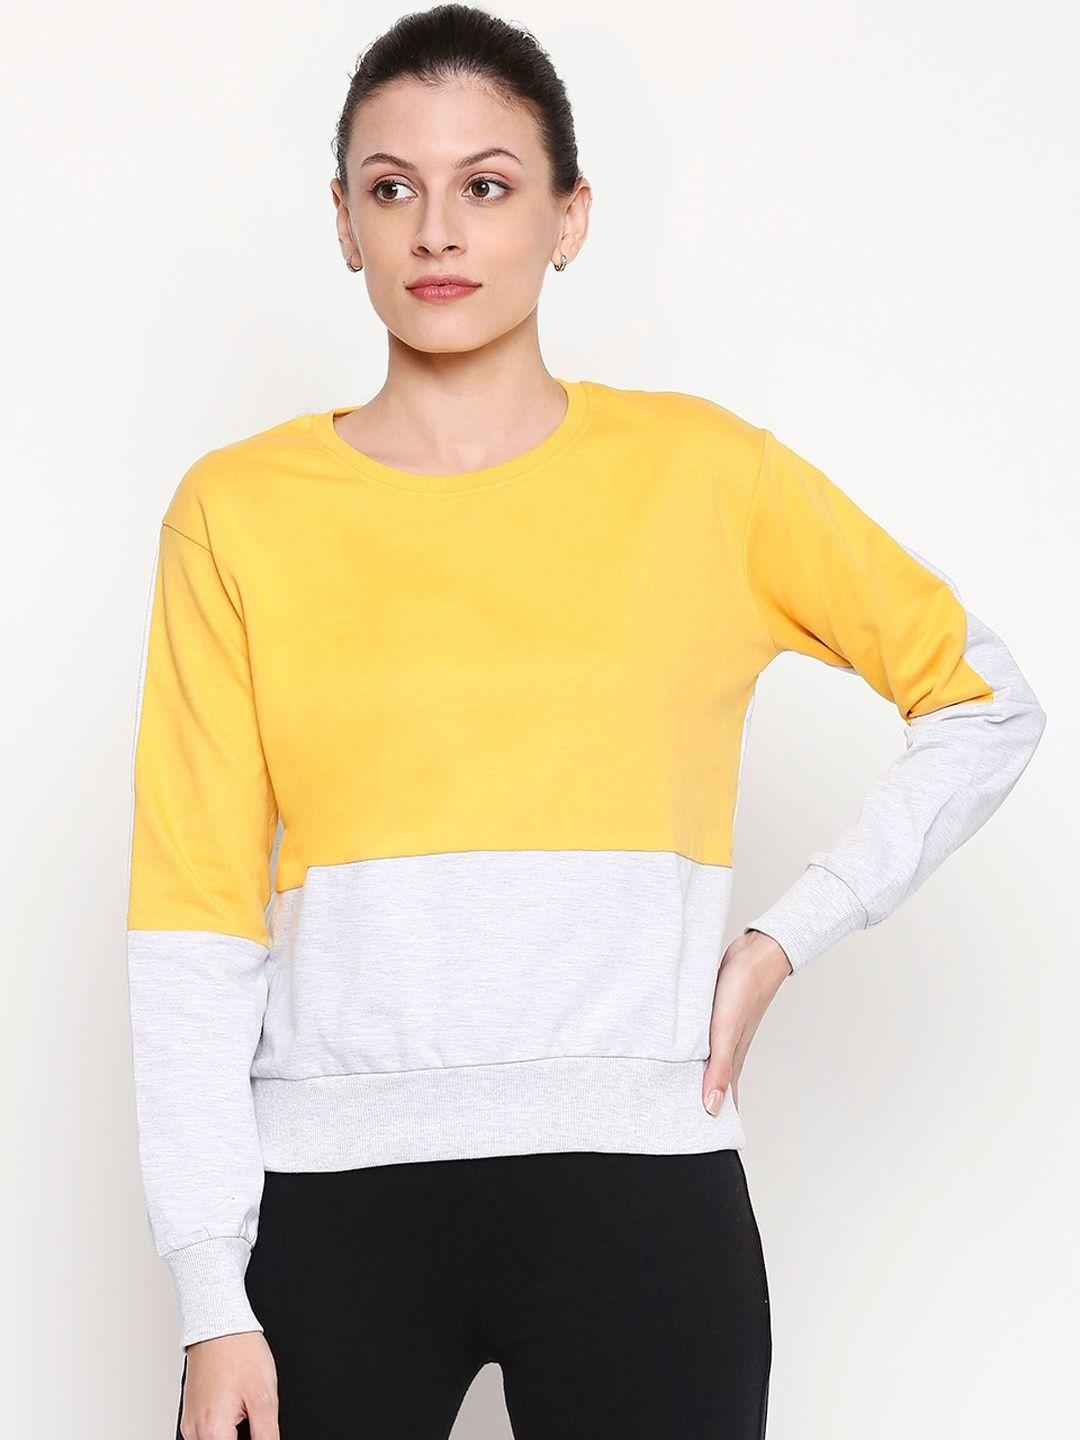 ajile by pantaloons women yellow & grey colourblocked sweatshirt